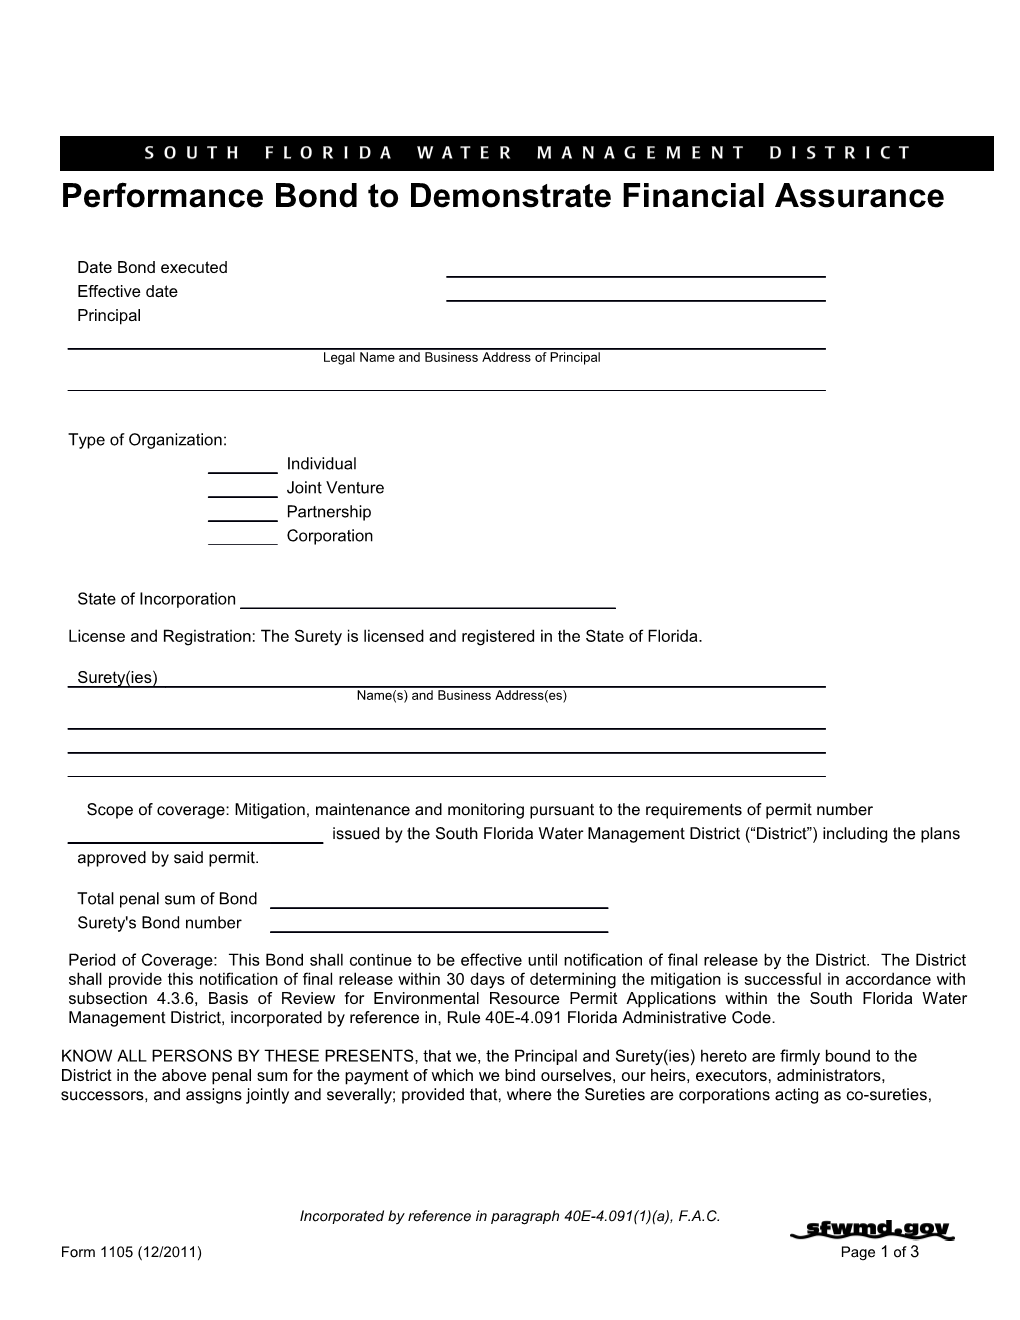 Performance Bond to Demonstrate Financial Assurance